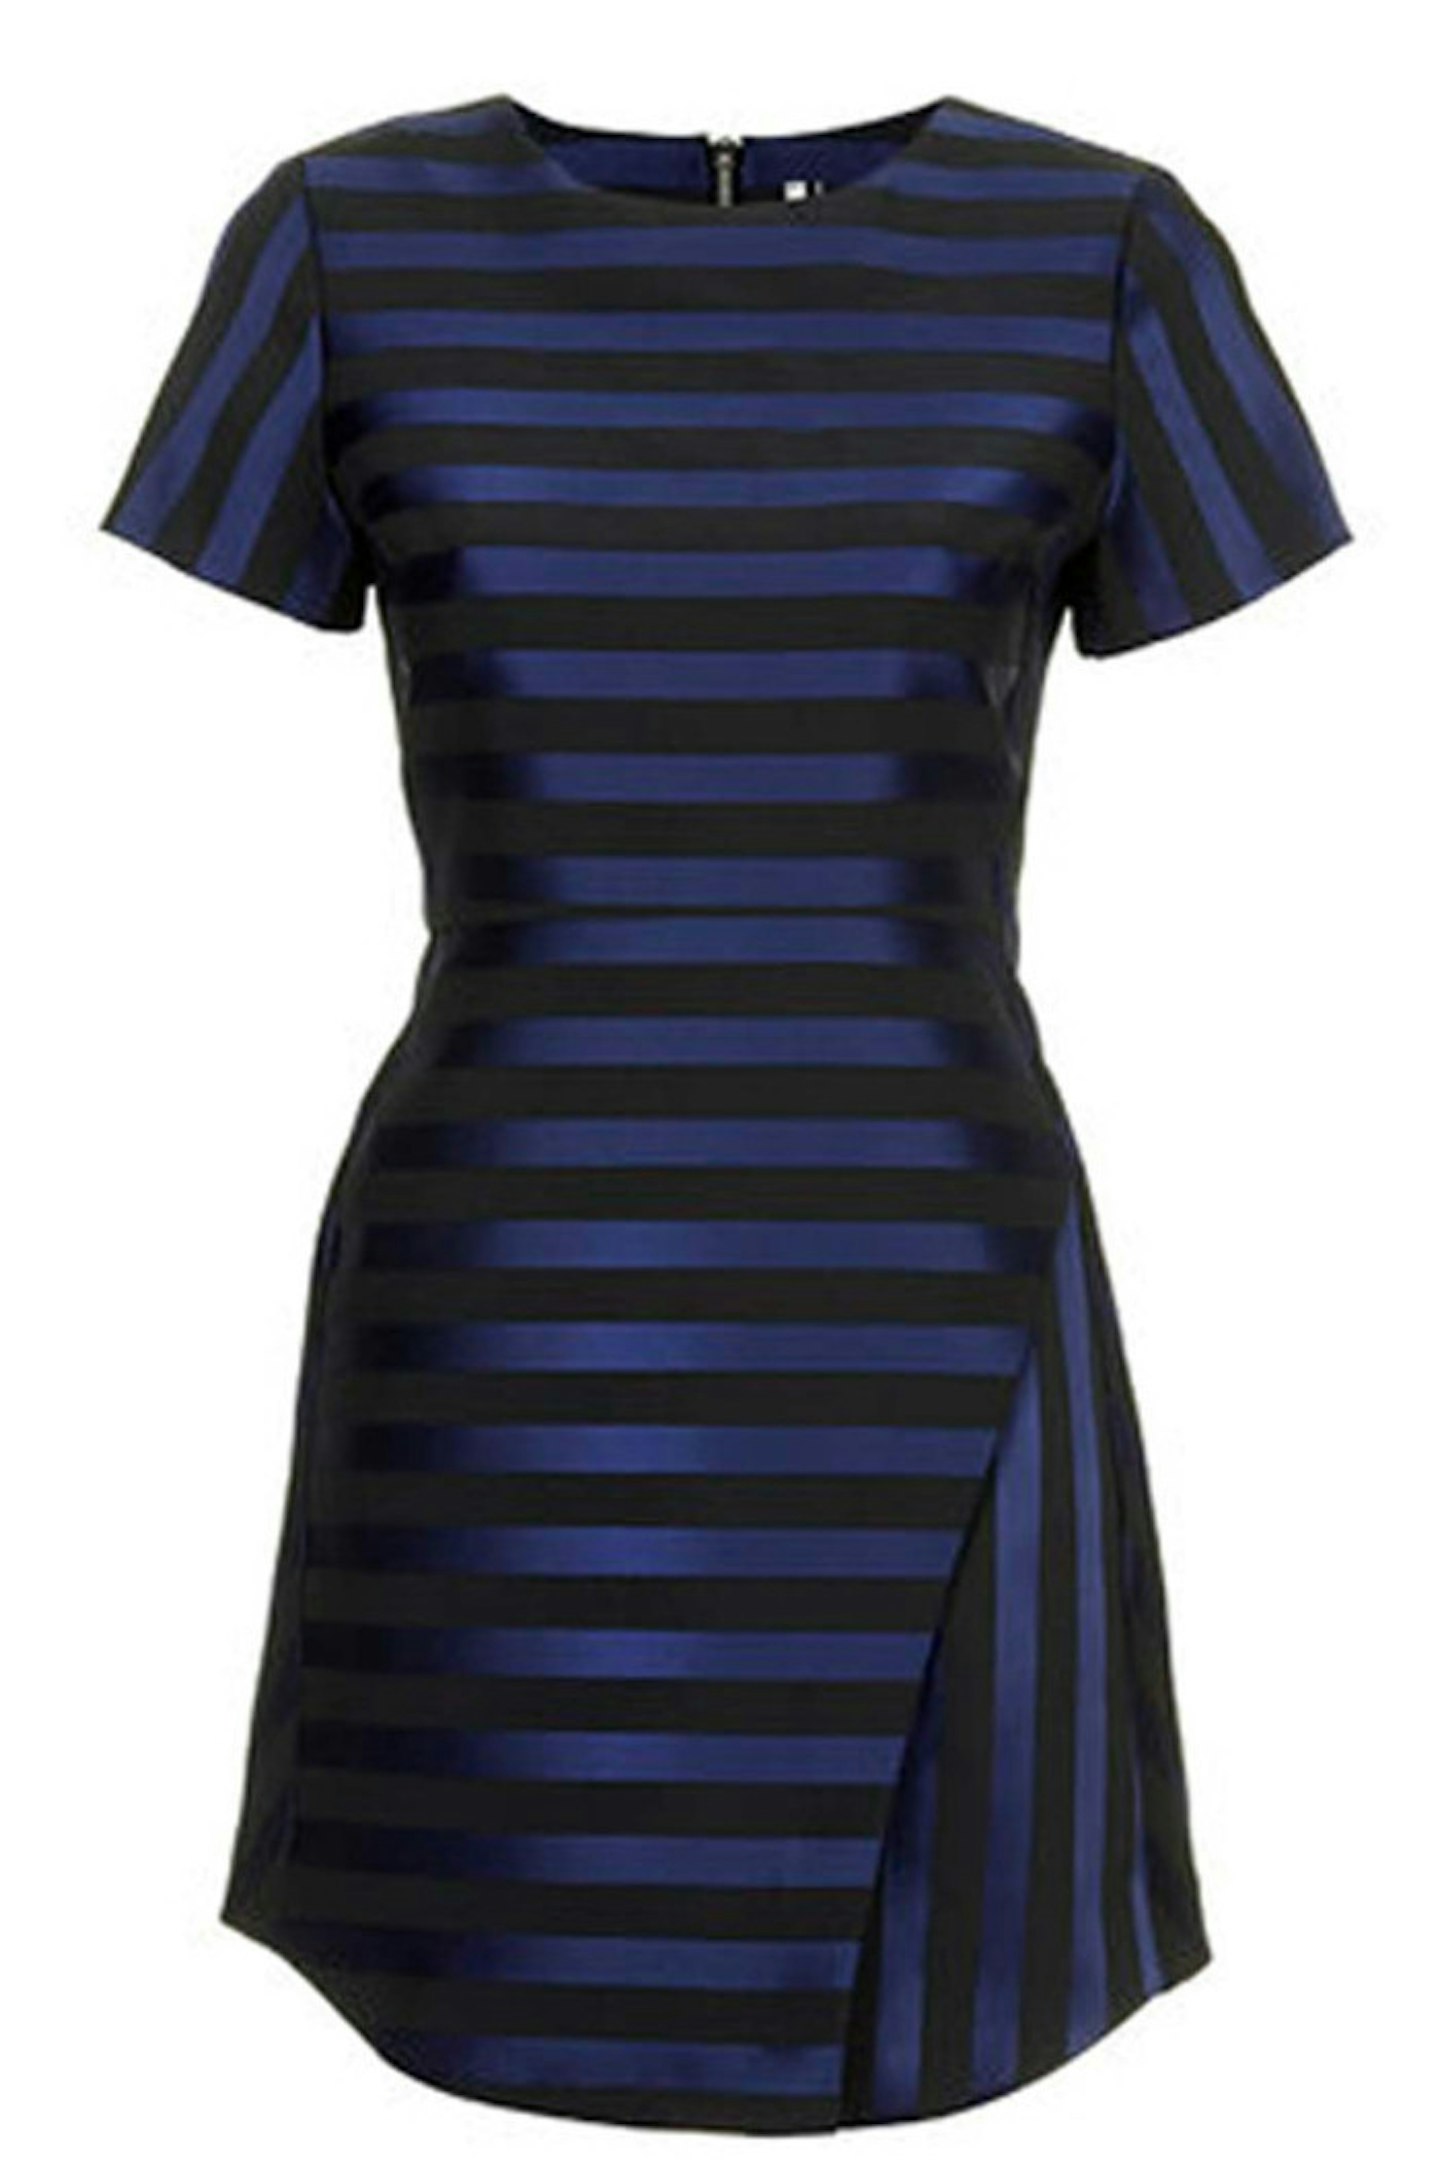 46. Blue and black striped satin dress, £70, Topshop